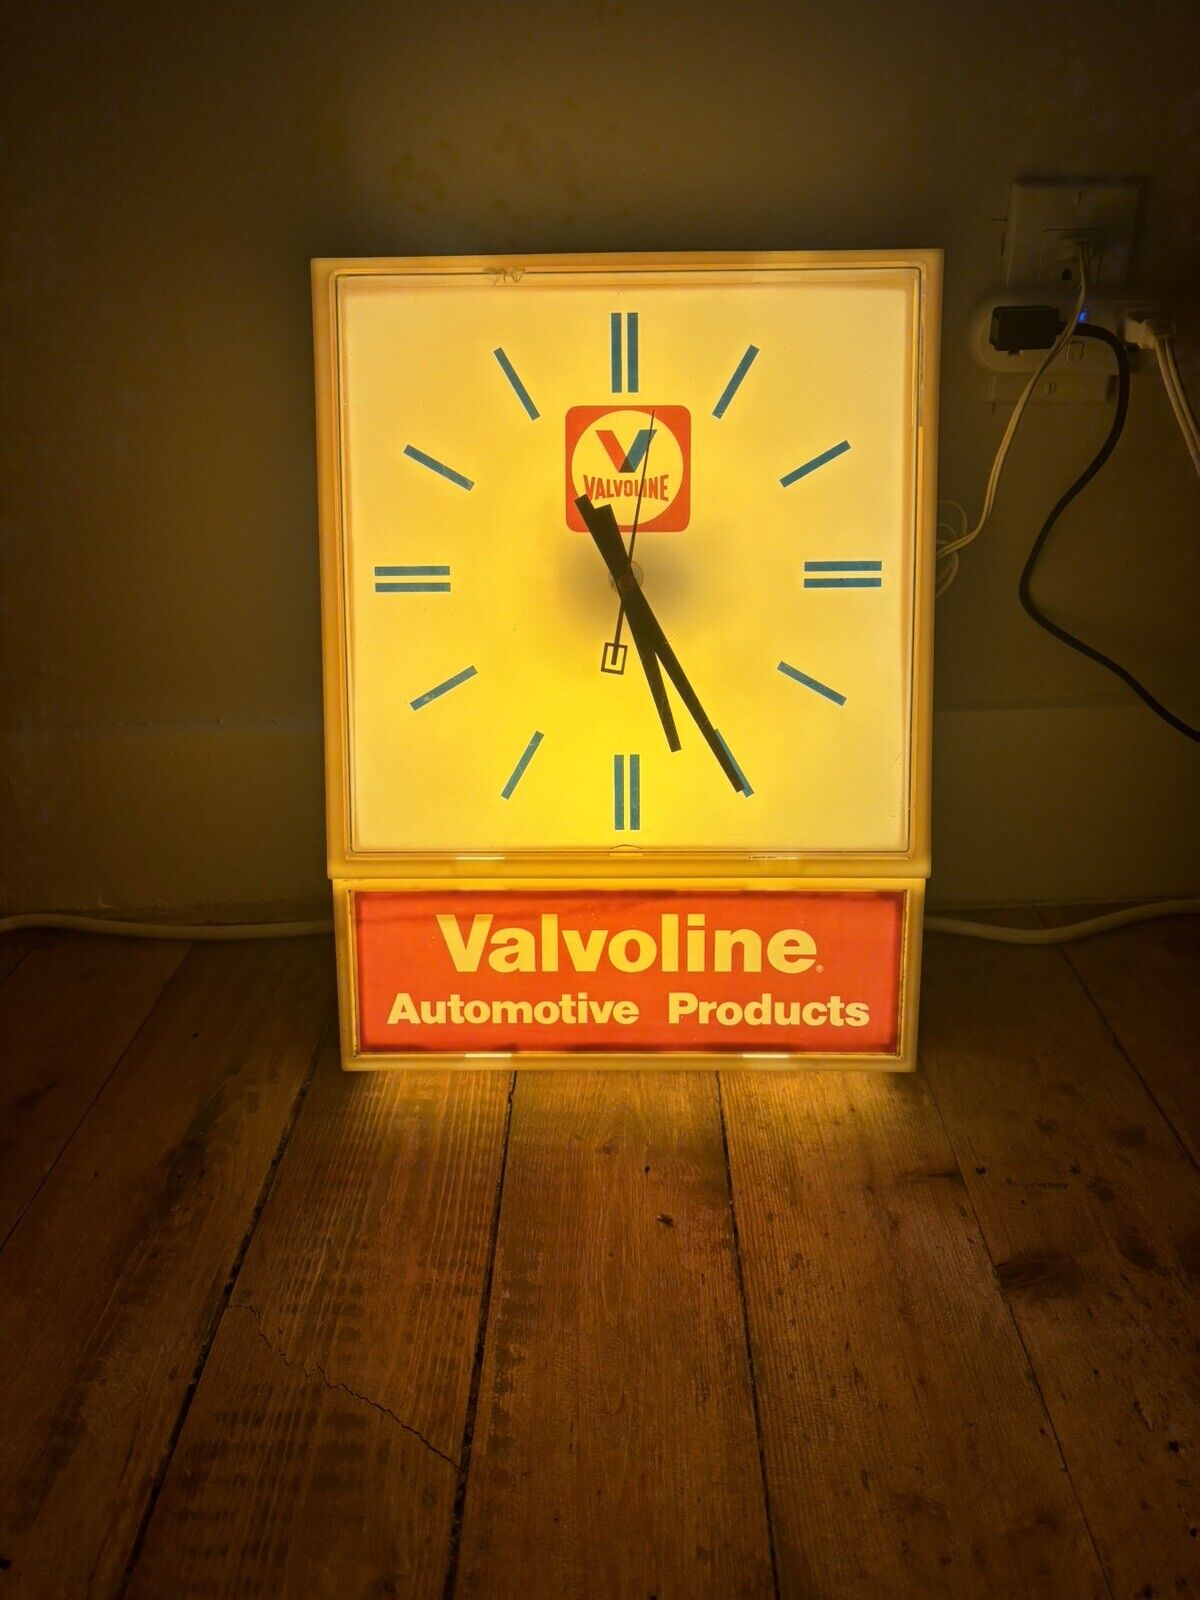 VTG Valvoline Automotive Oil Gas Service Station Hanging Light Up Wall Clock